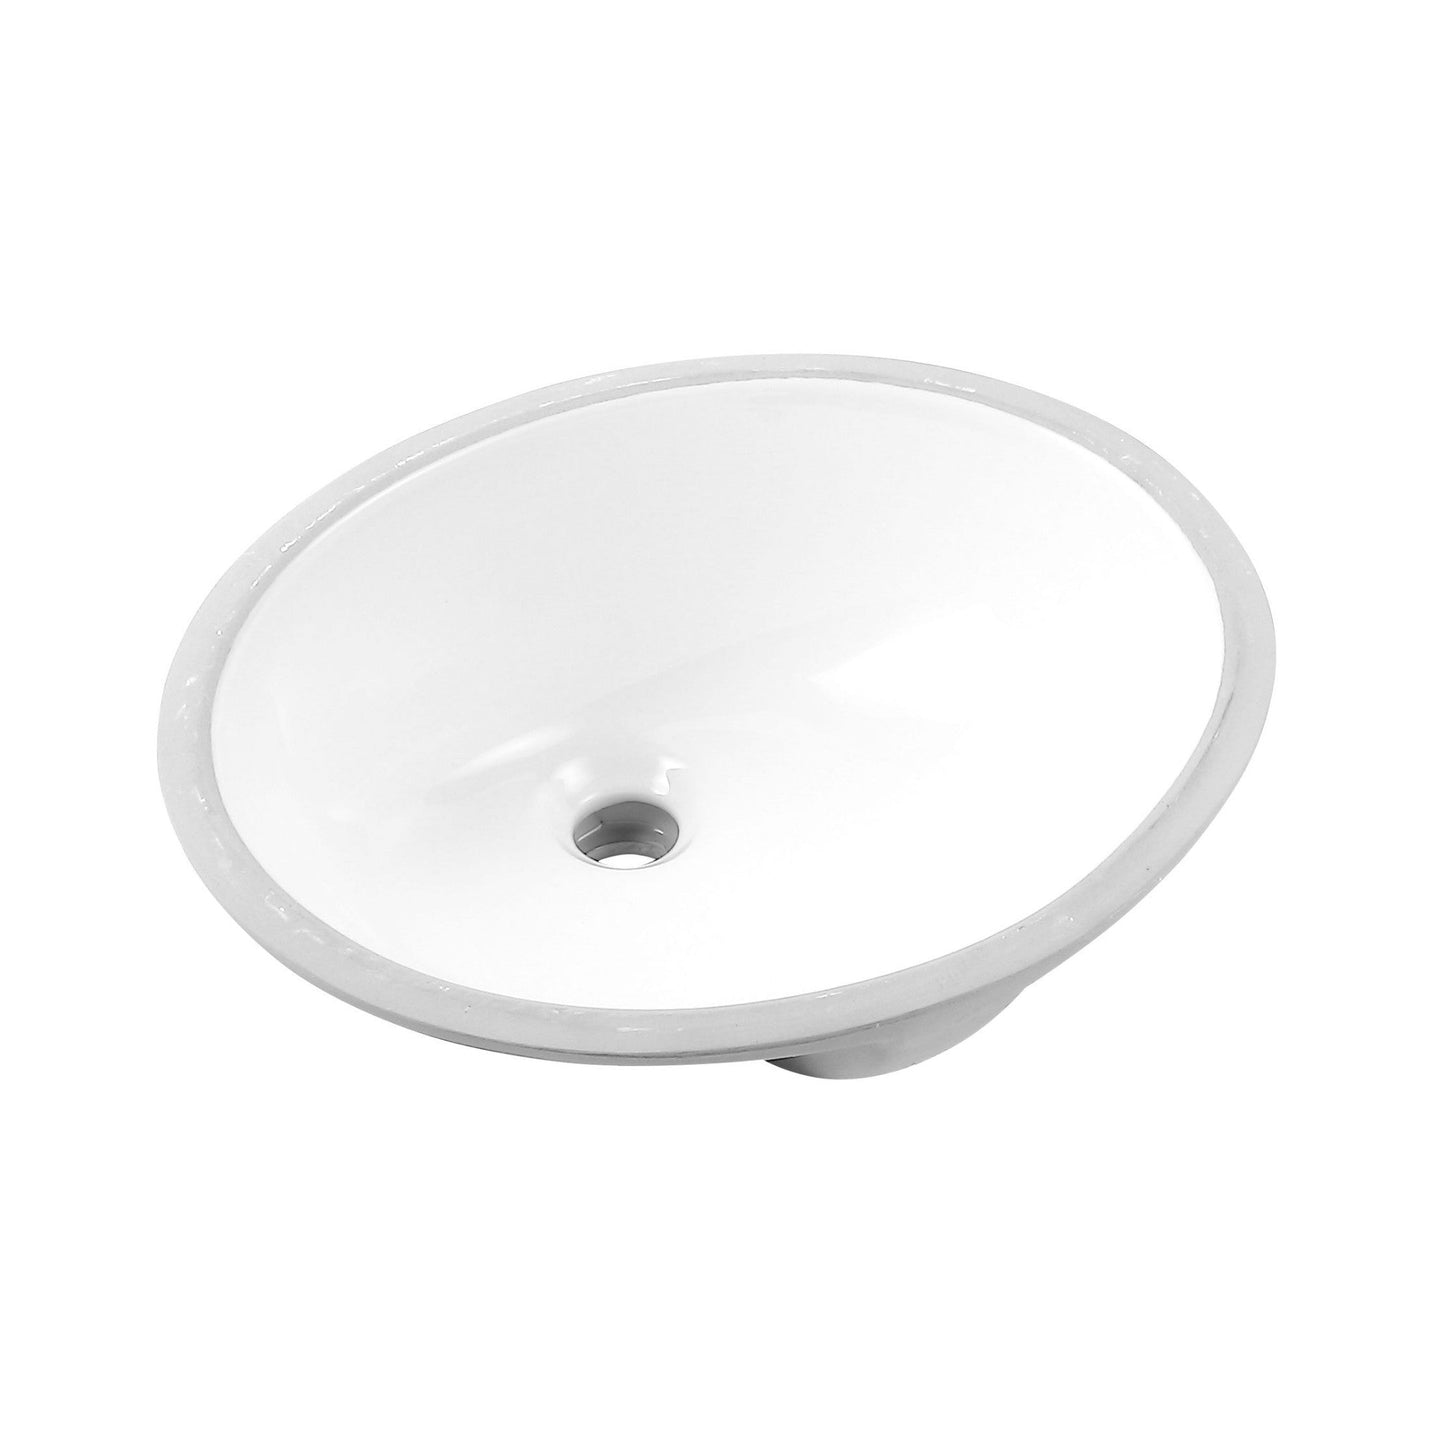 Ratel 18" x 15" White Oval Ceramic Undermount Bathroom Sink